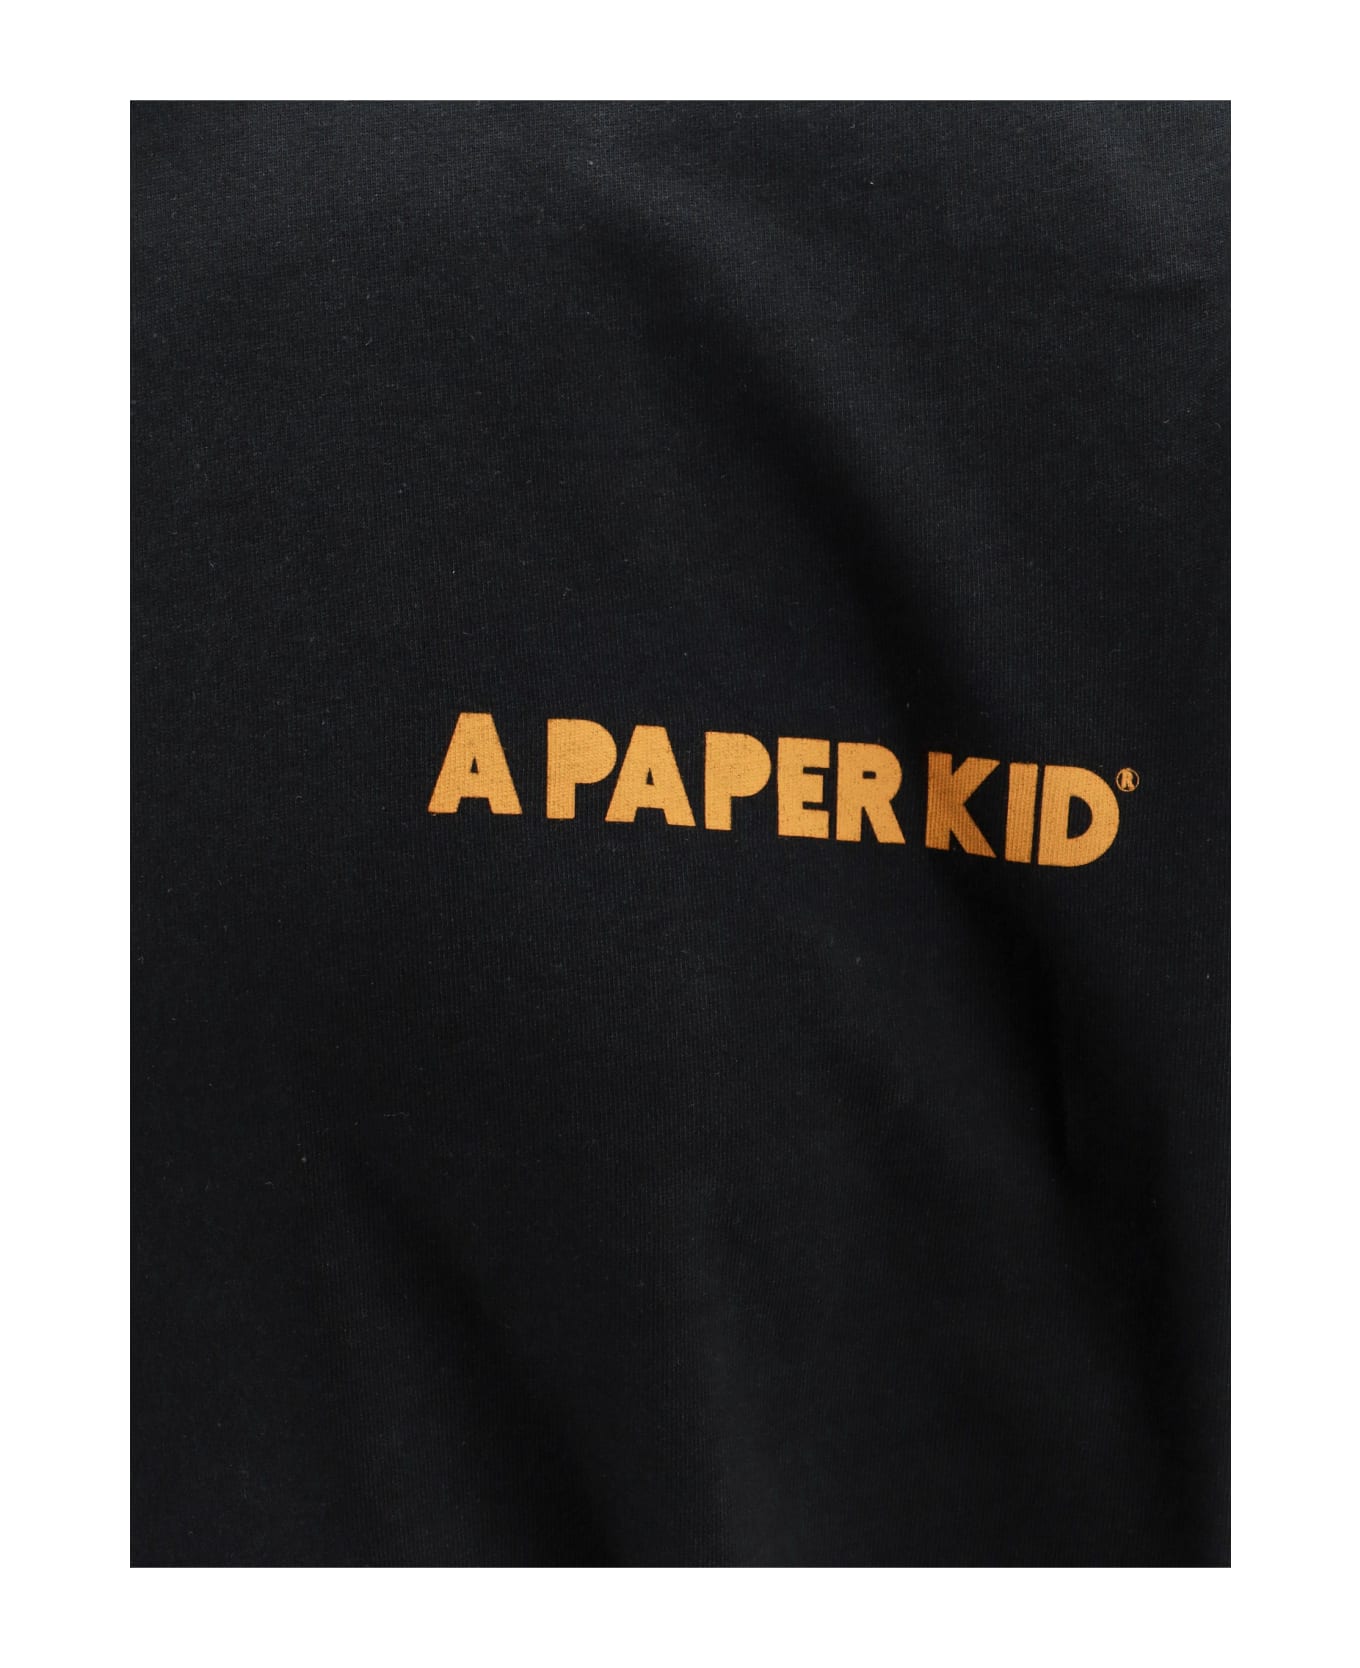 A Paper Kid T-shirt Tシャツ